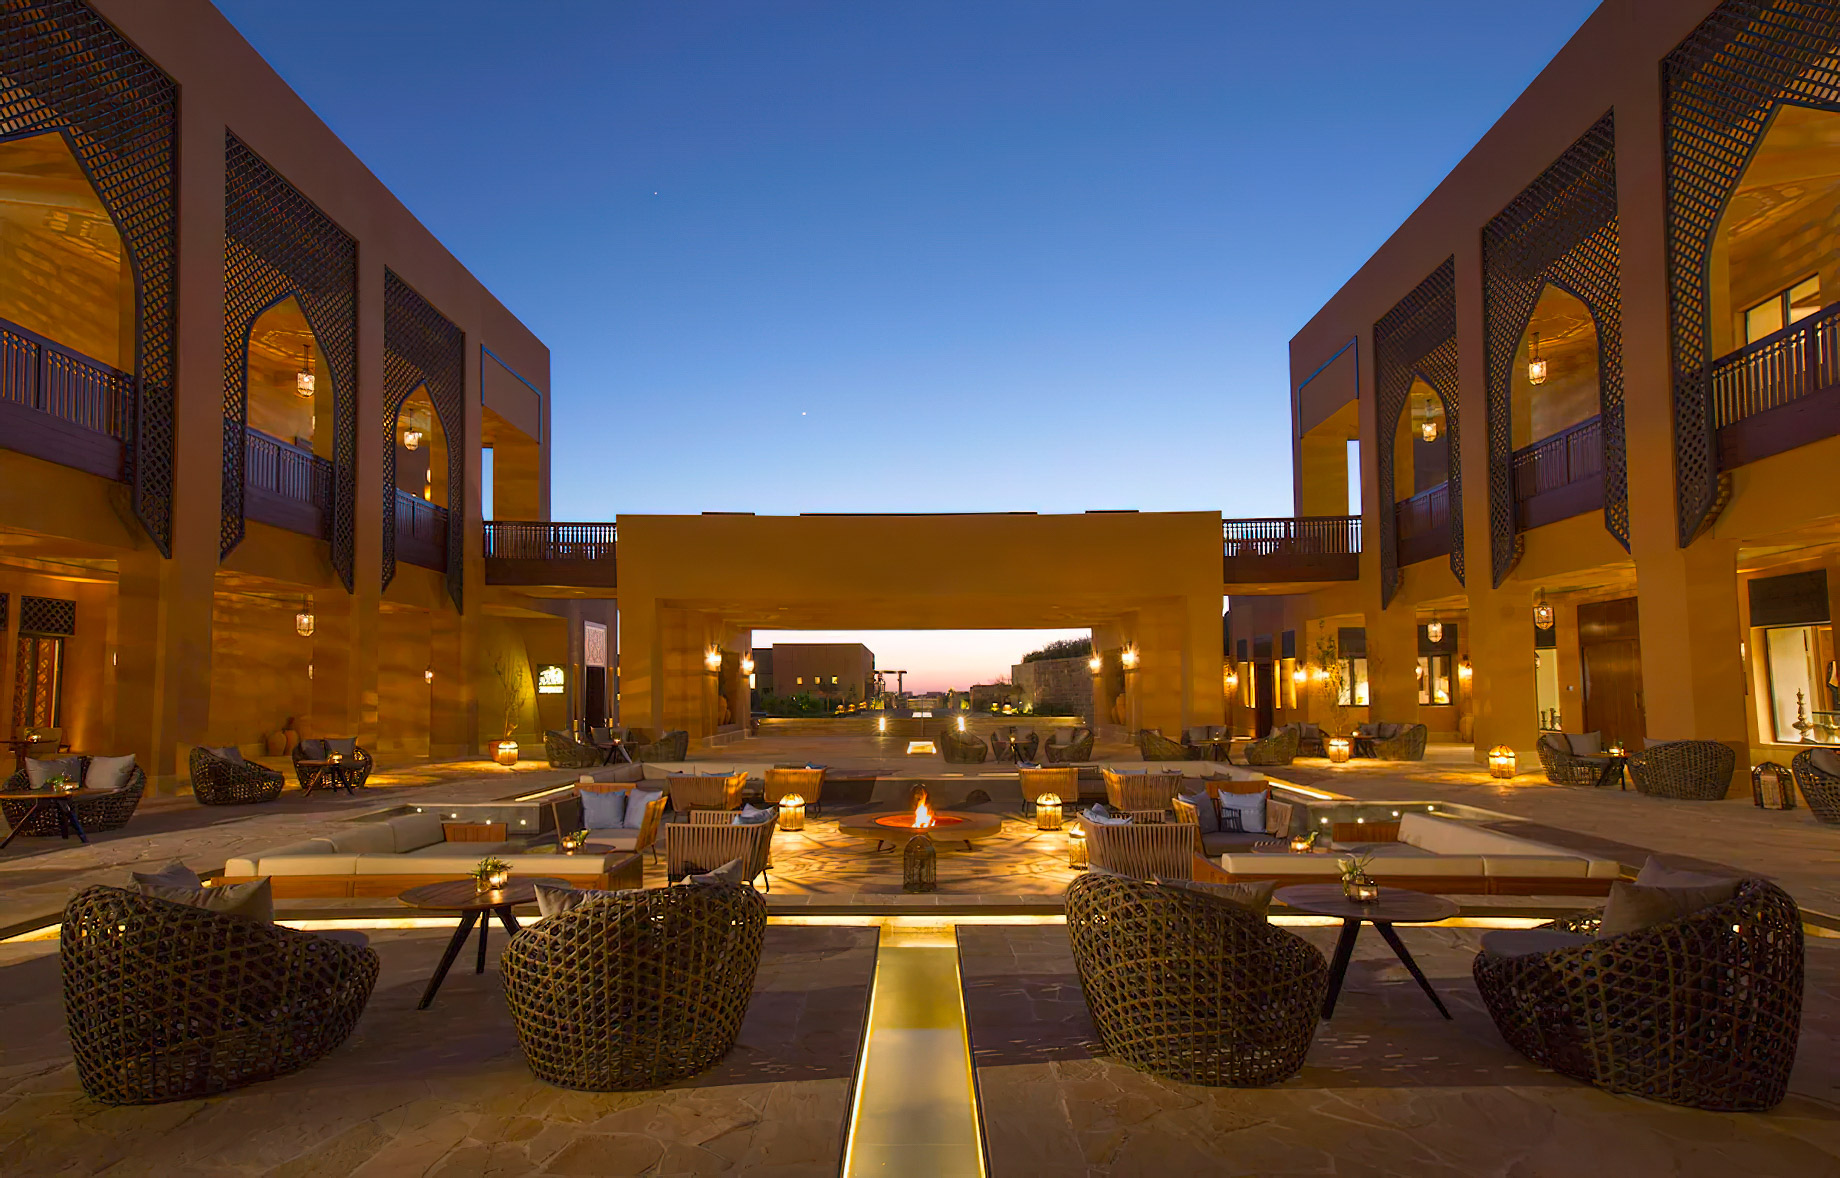 Anantara Al Jabal Al Akhdar Resort - Oman - Resort Courtyard Evening View